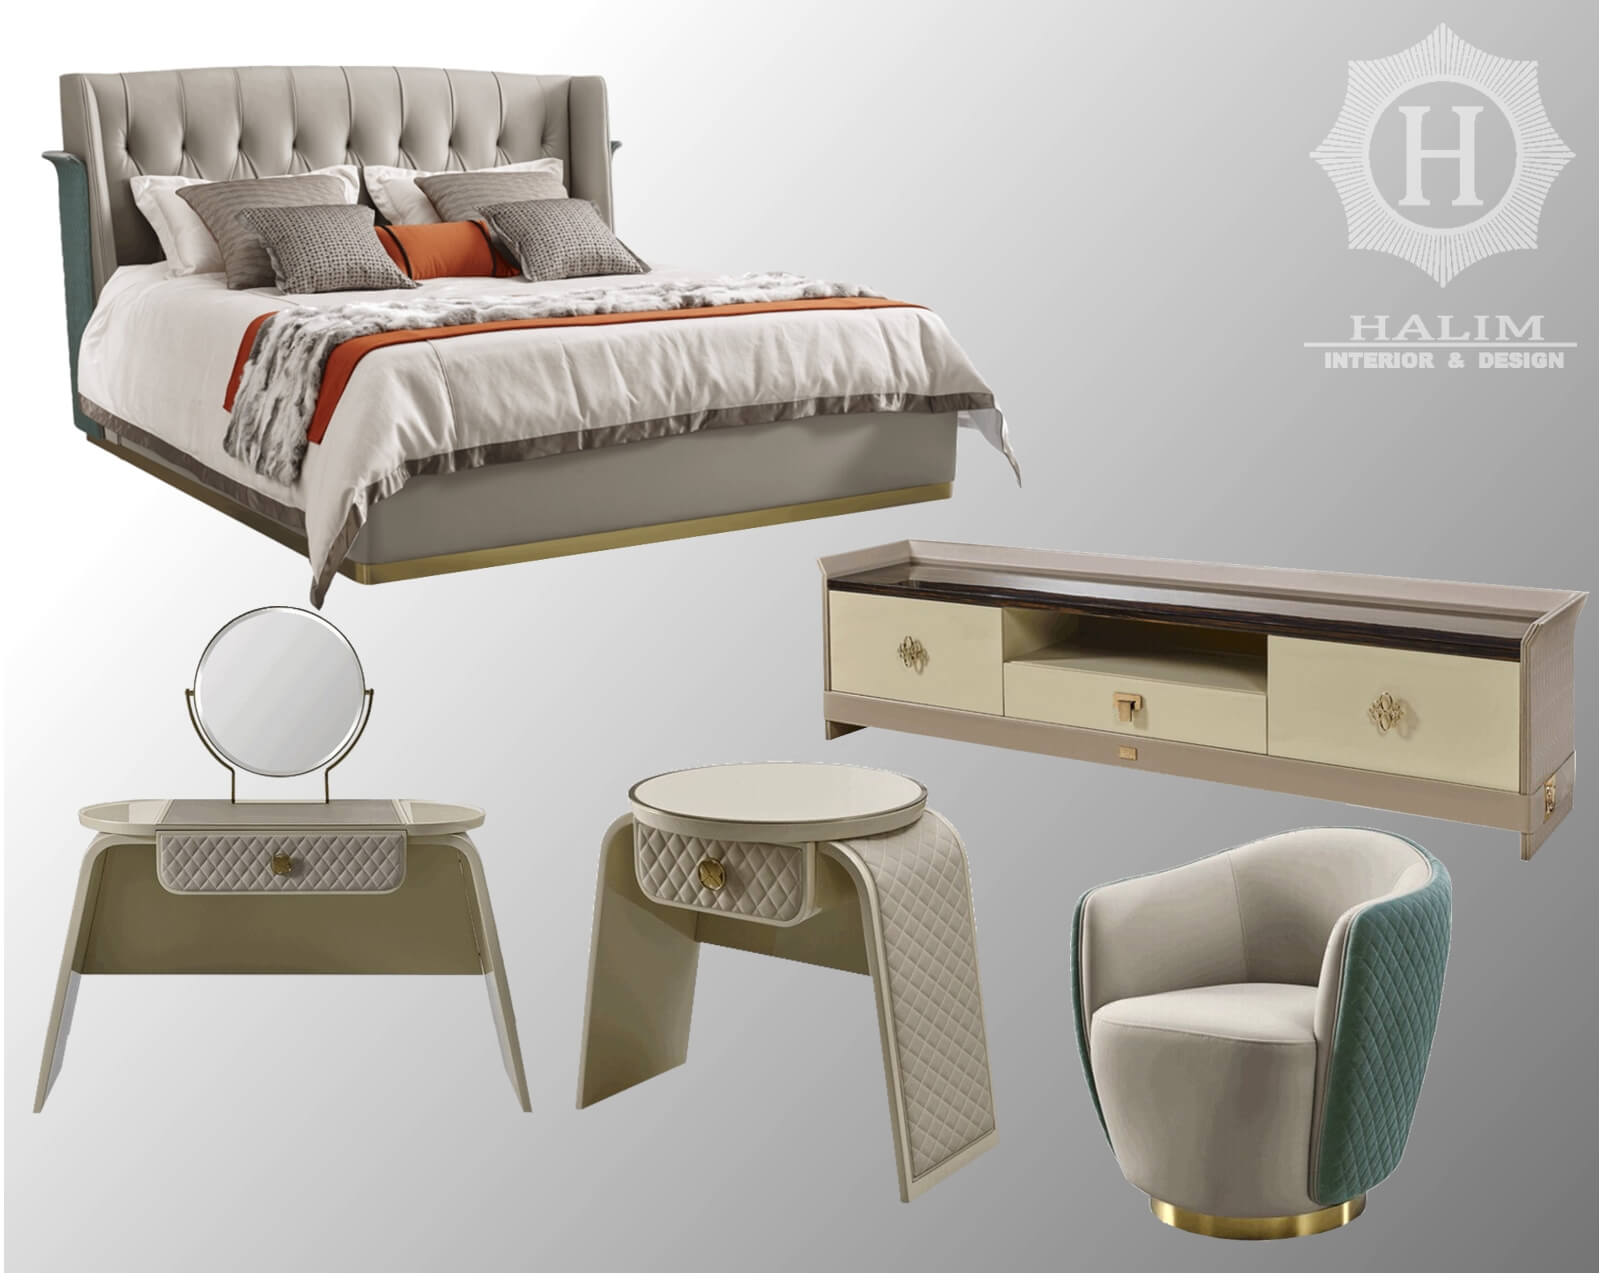 Halim Interior modern furniture contemporer american style minimalist european classic surabaya BED 2 1